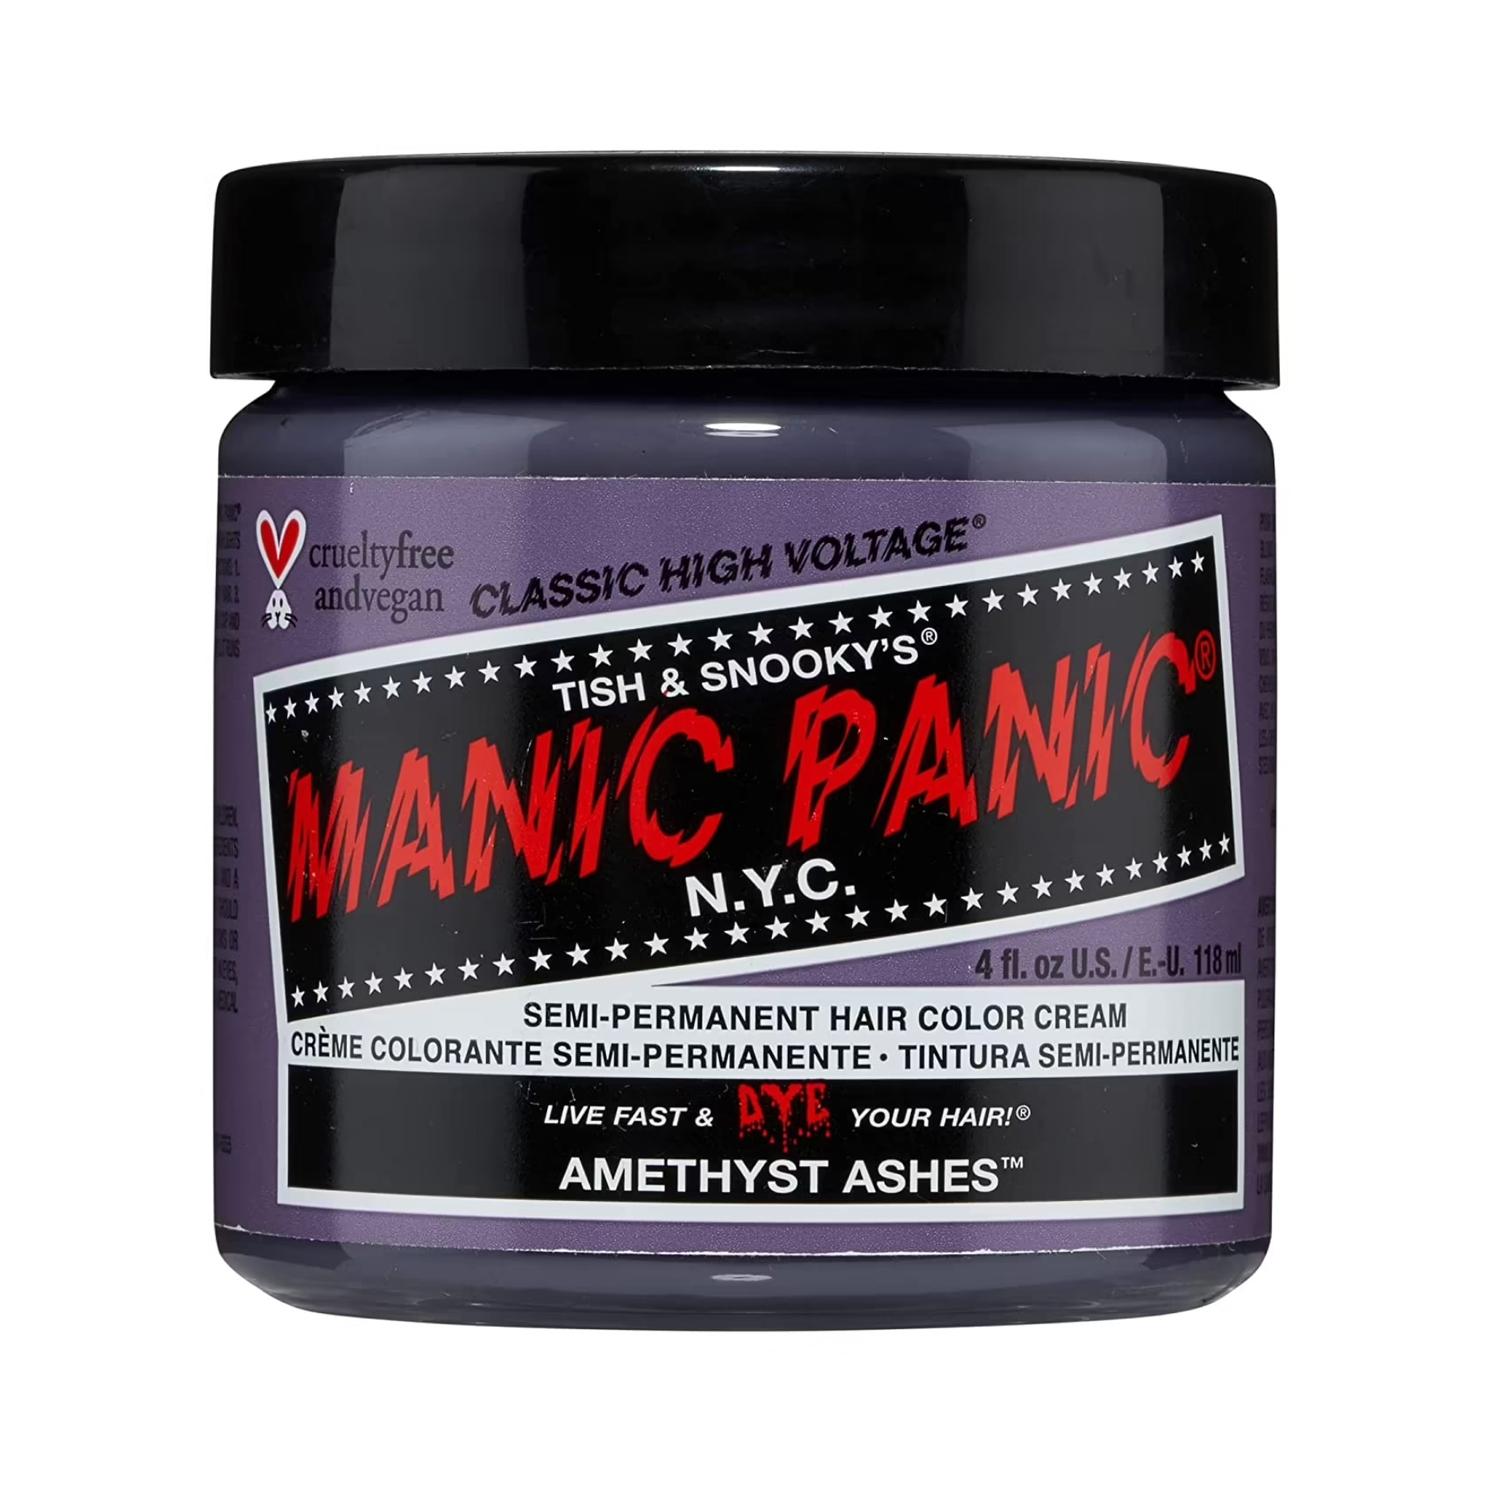 manic panic classic high voltage semi permanent hair color cream - amethyst ashes (118ml)